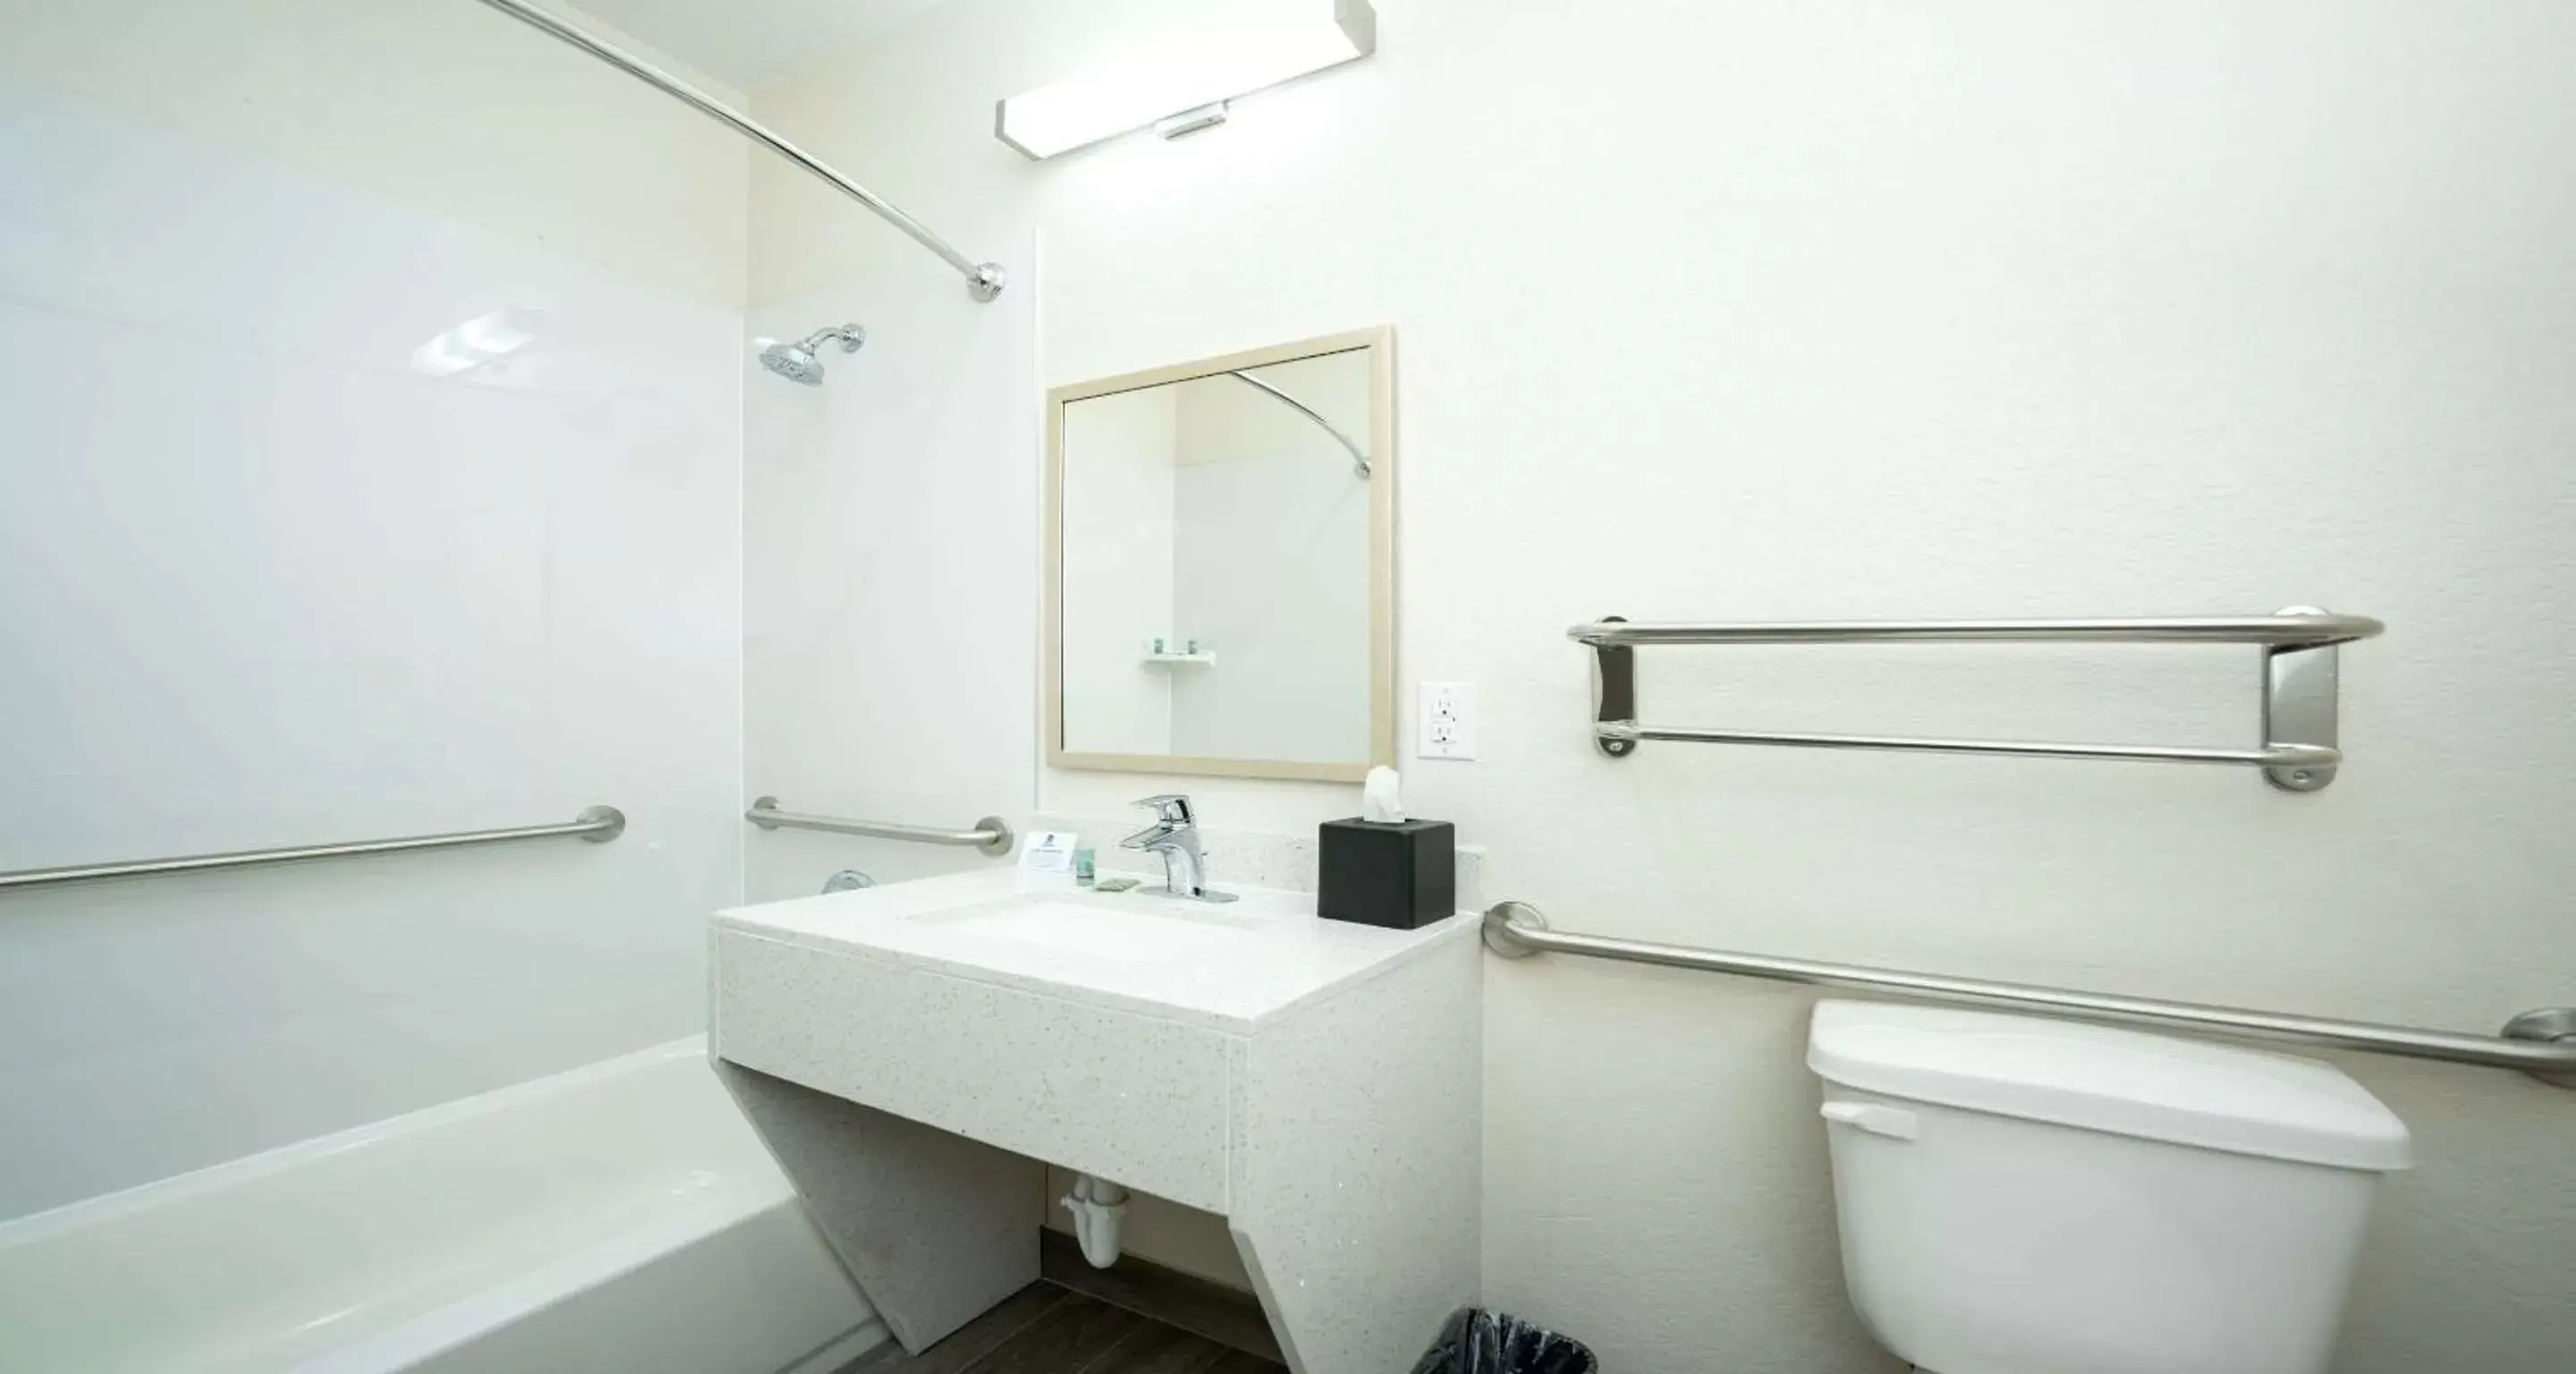 Photo of the whole room, Bathroom in Best Western Houston Bush Intercontinental Airport Inn